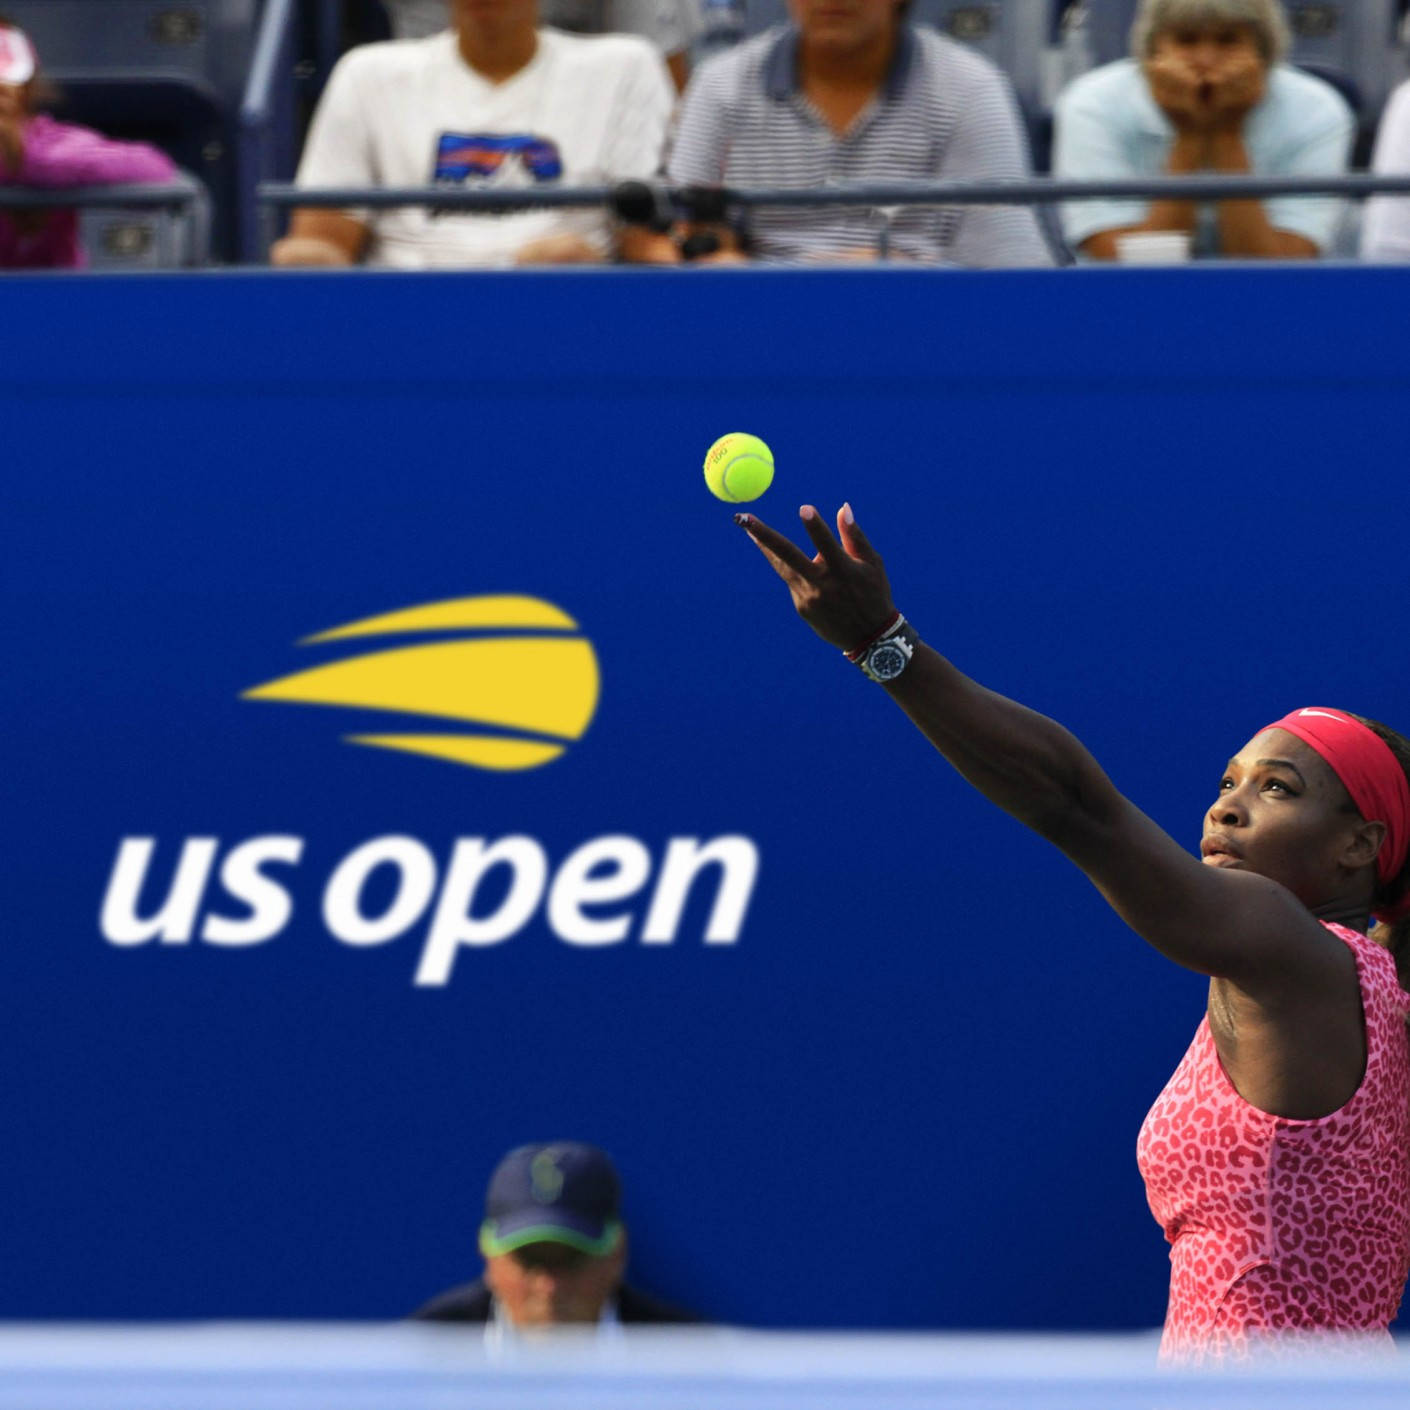 US Open Serena Williams Serve Wallpaper